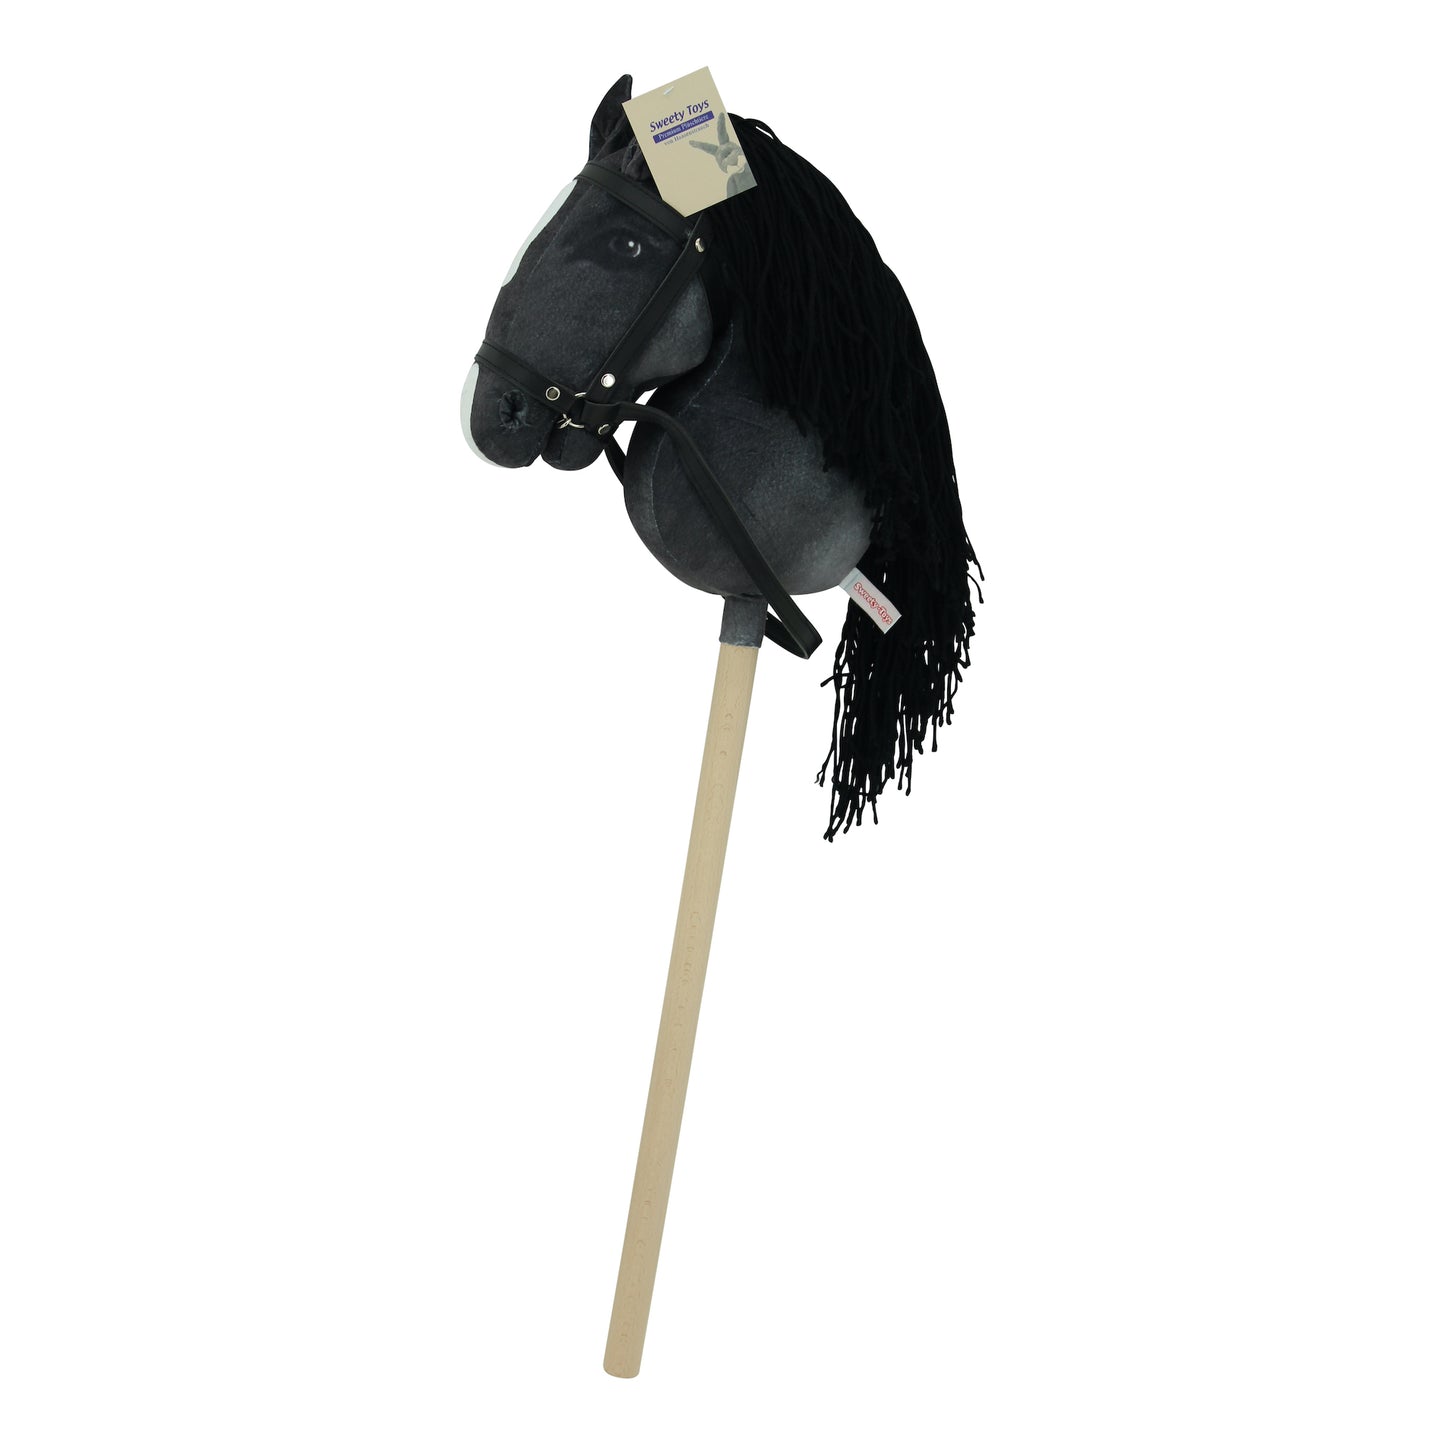 Sweety Toys 14224 Hobbyhorse Hobby horse senza ruote adatto per tornei di hobbistica